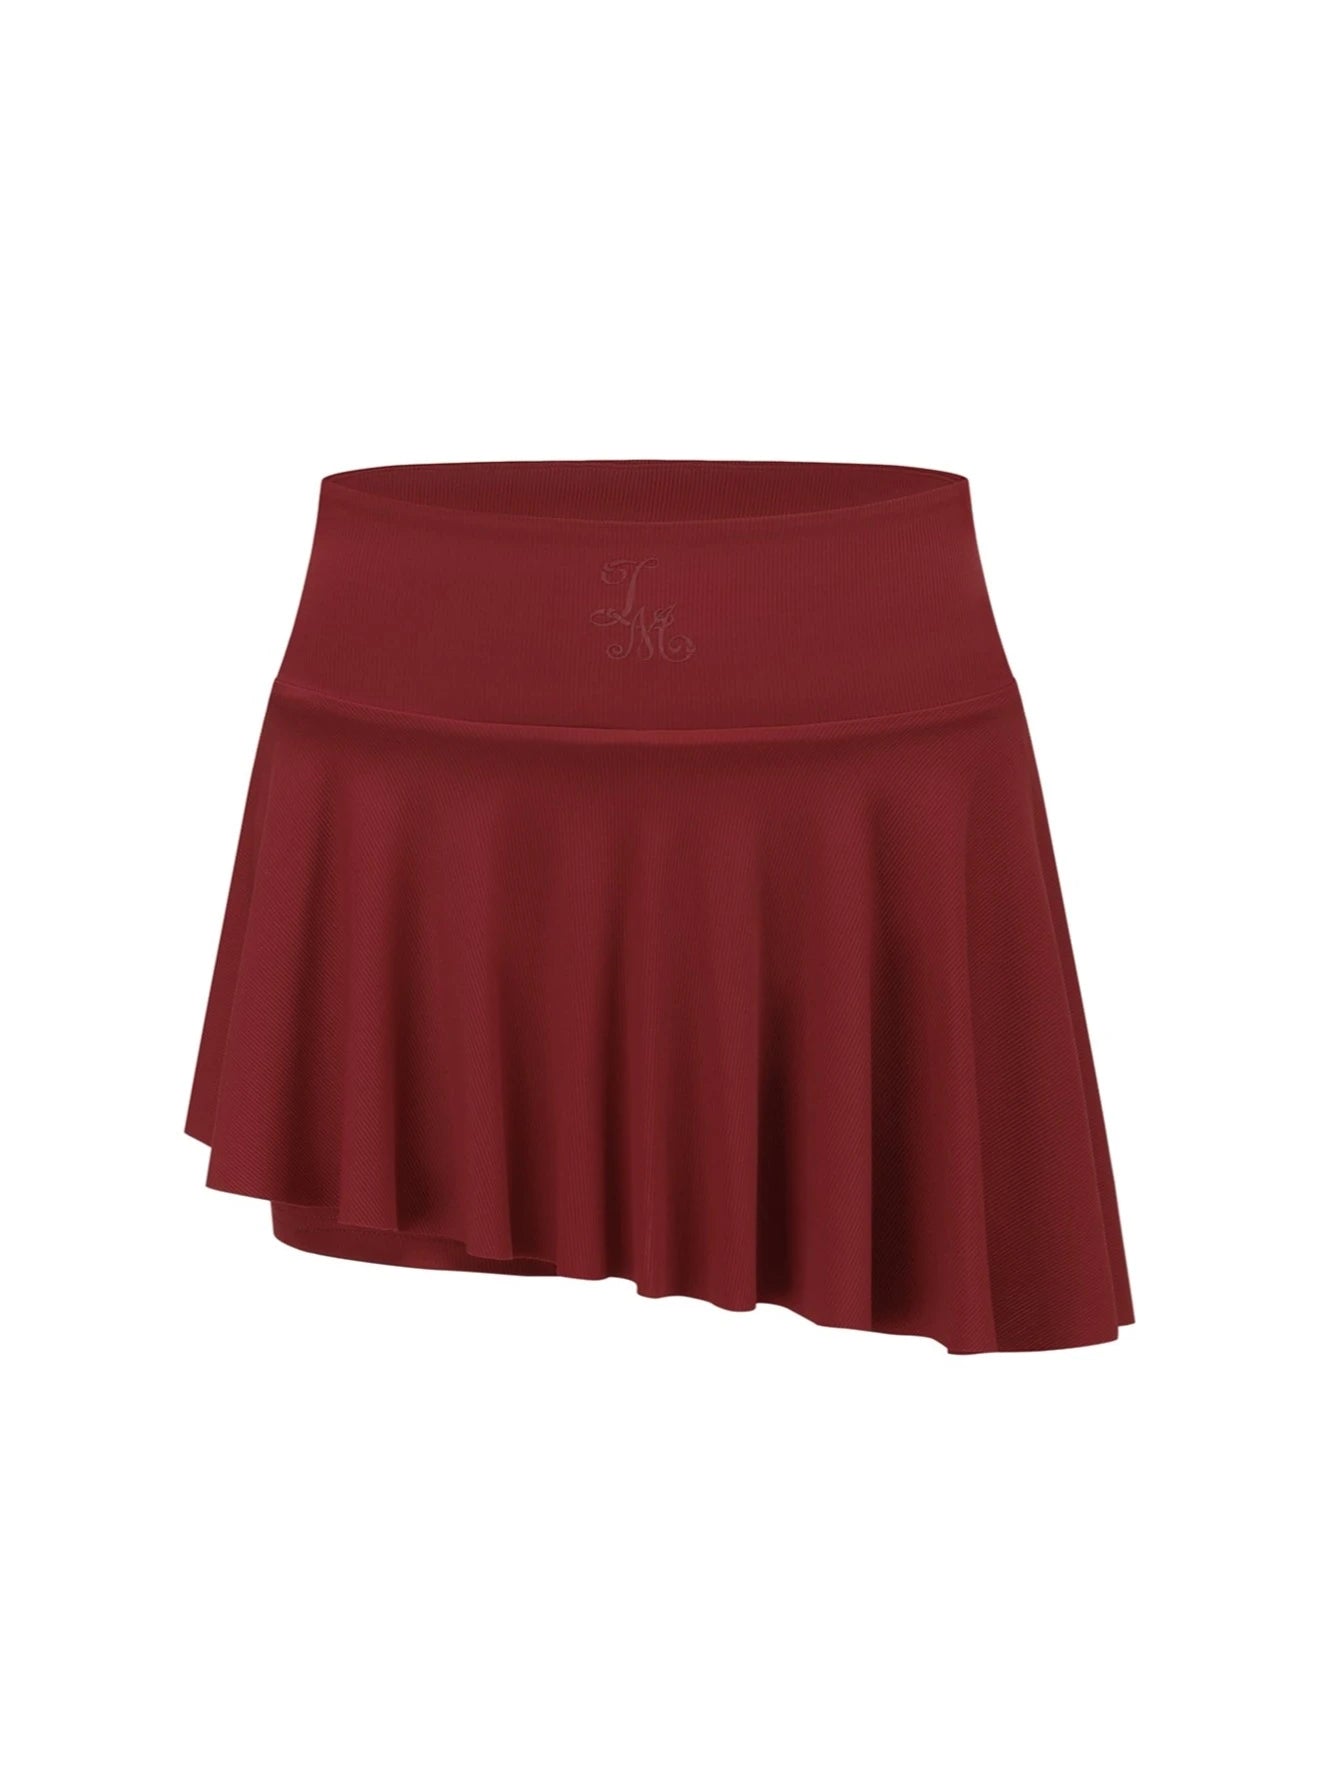 Tight cardigan top + camisole + asymmetrical skirt